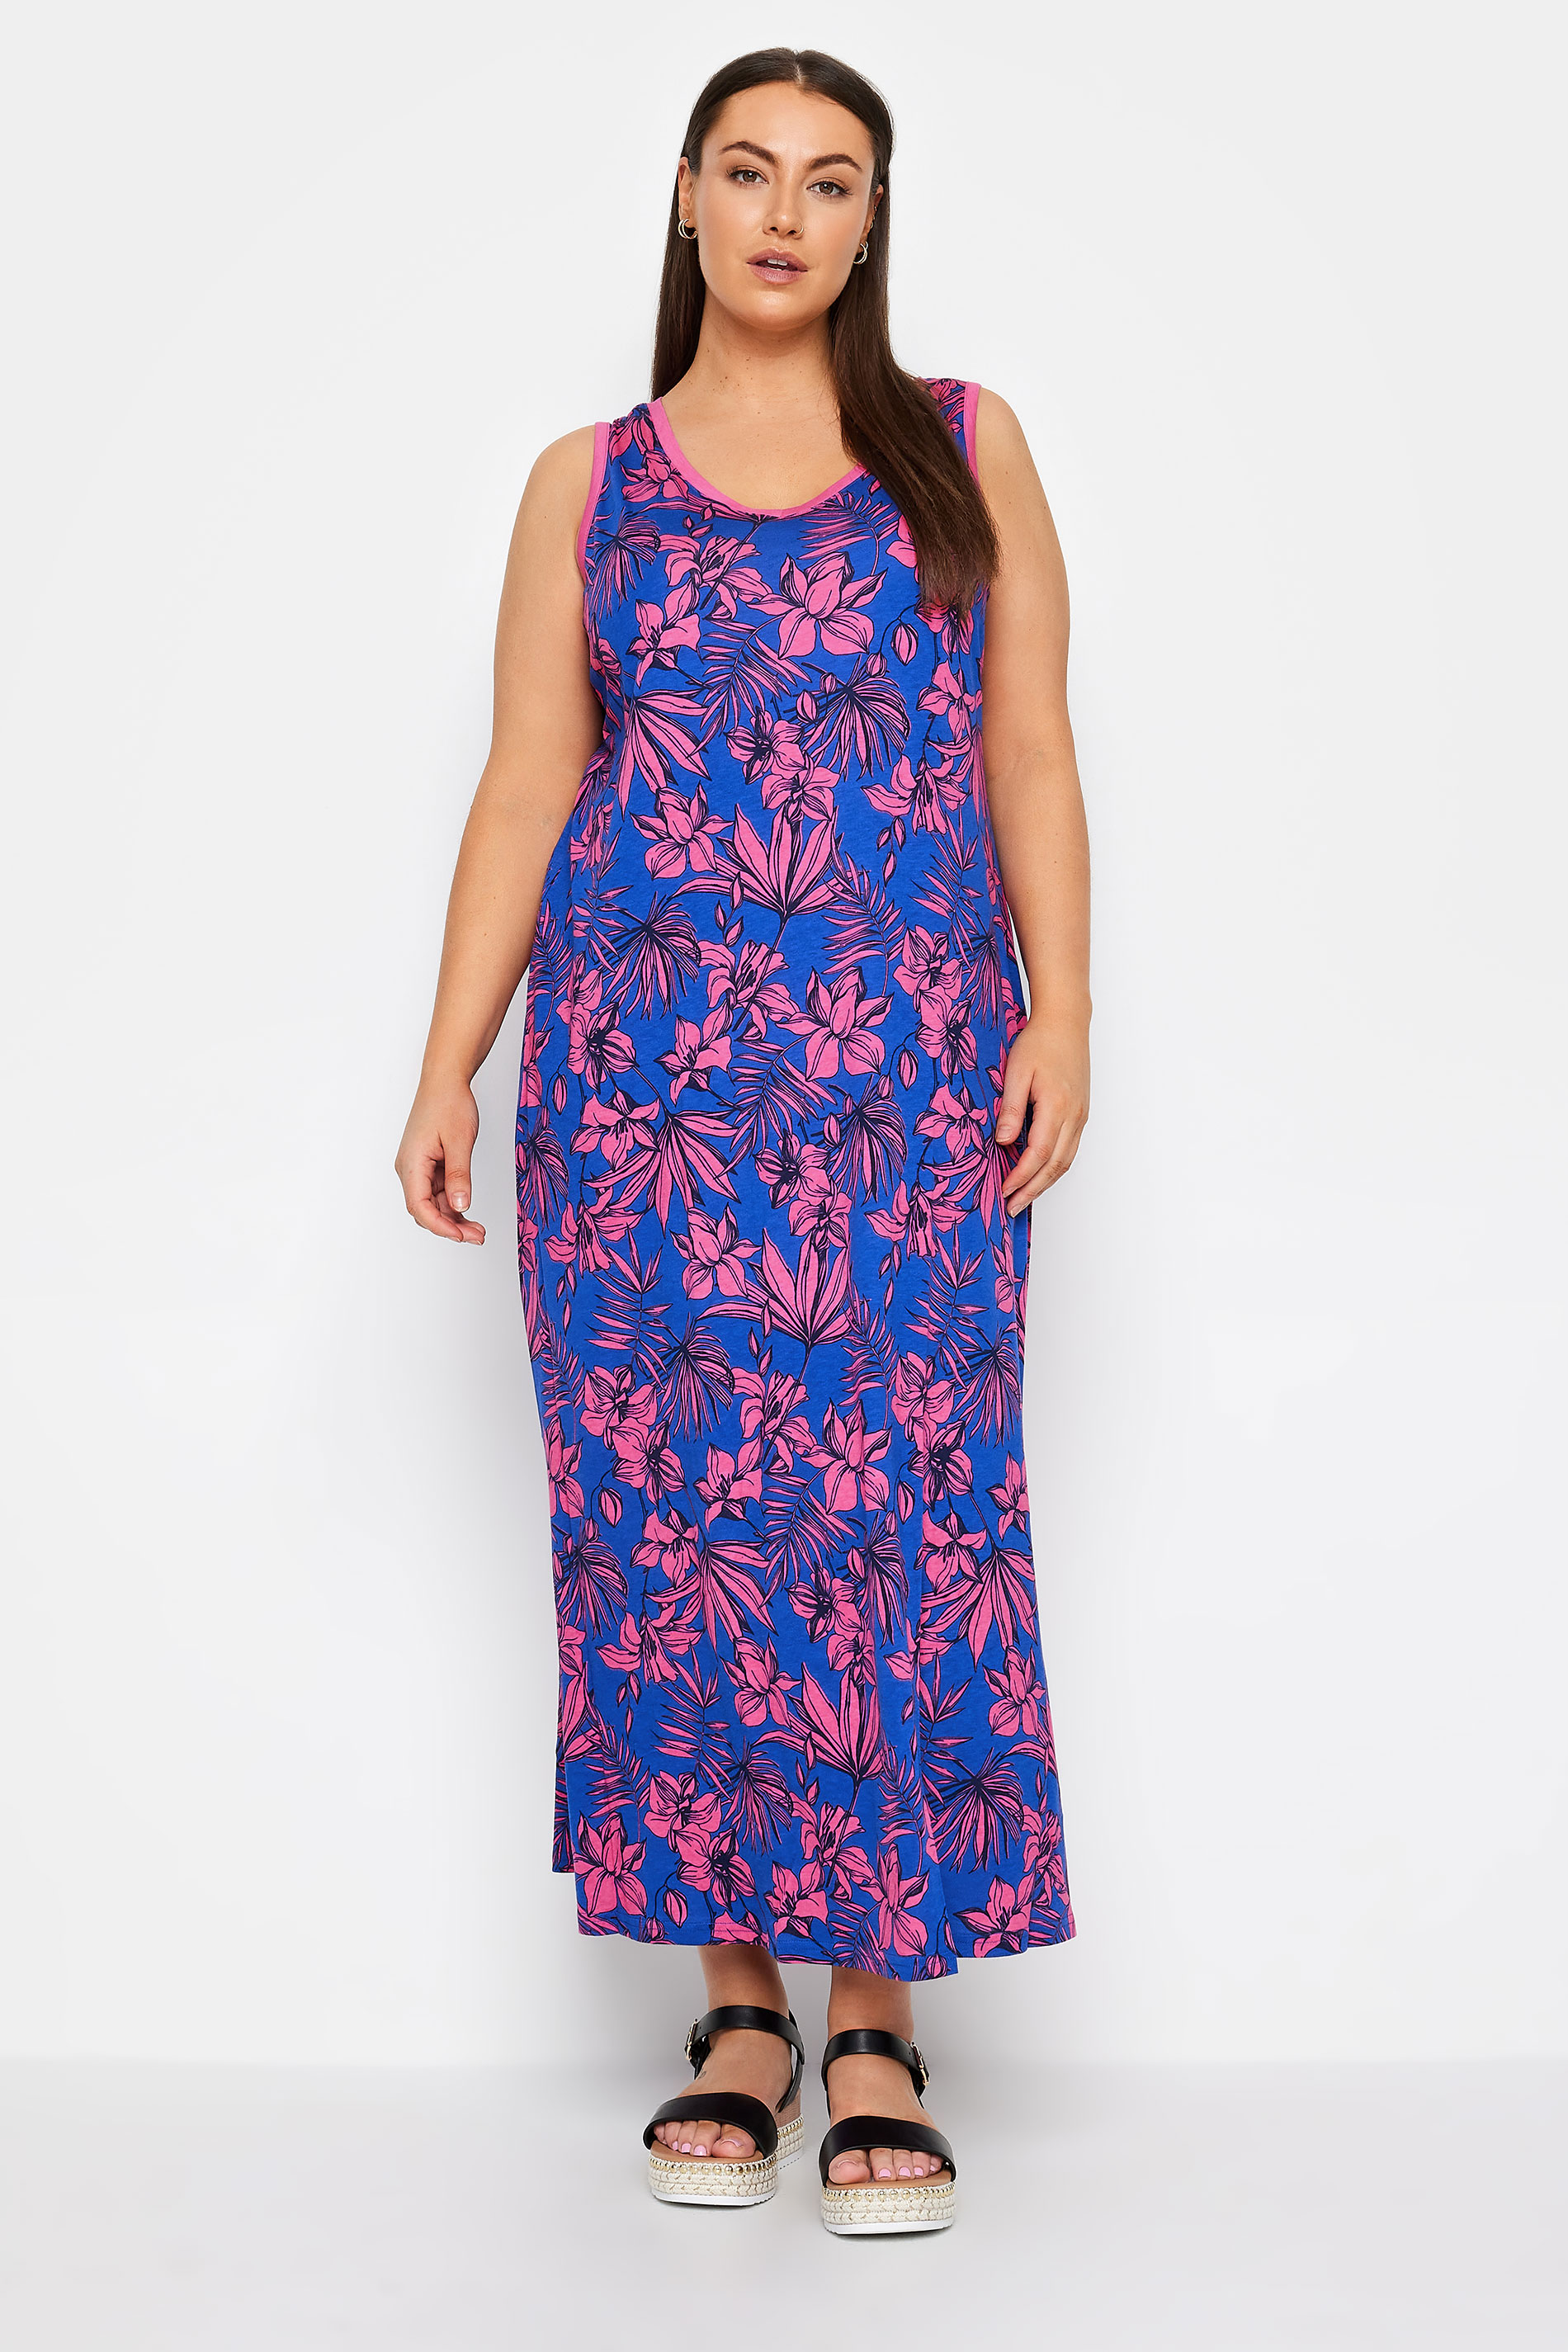 Evans Blue & Pink Floral Maxi Dress 2